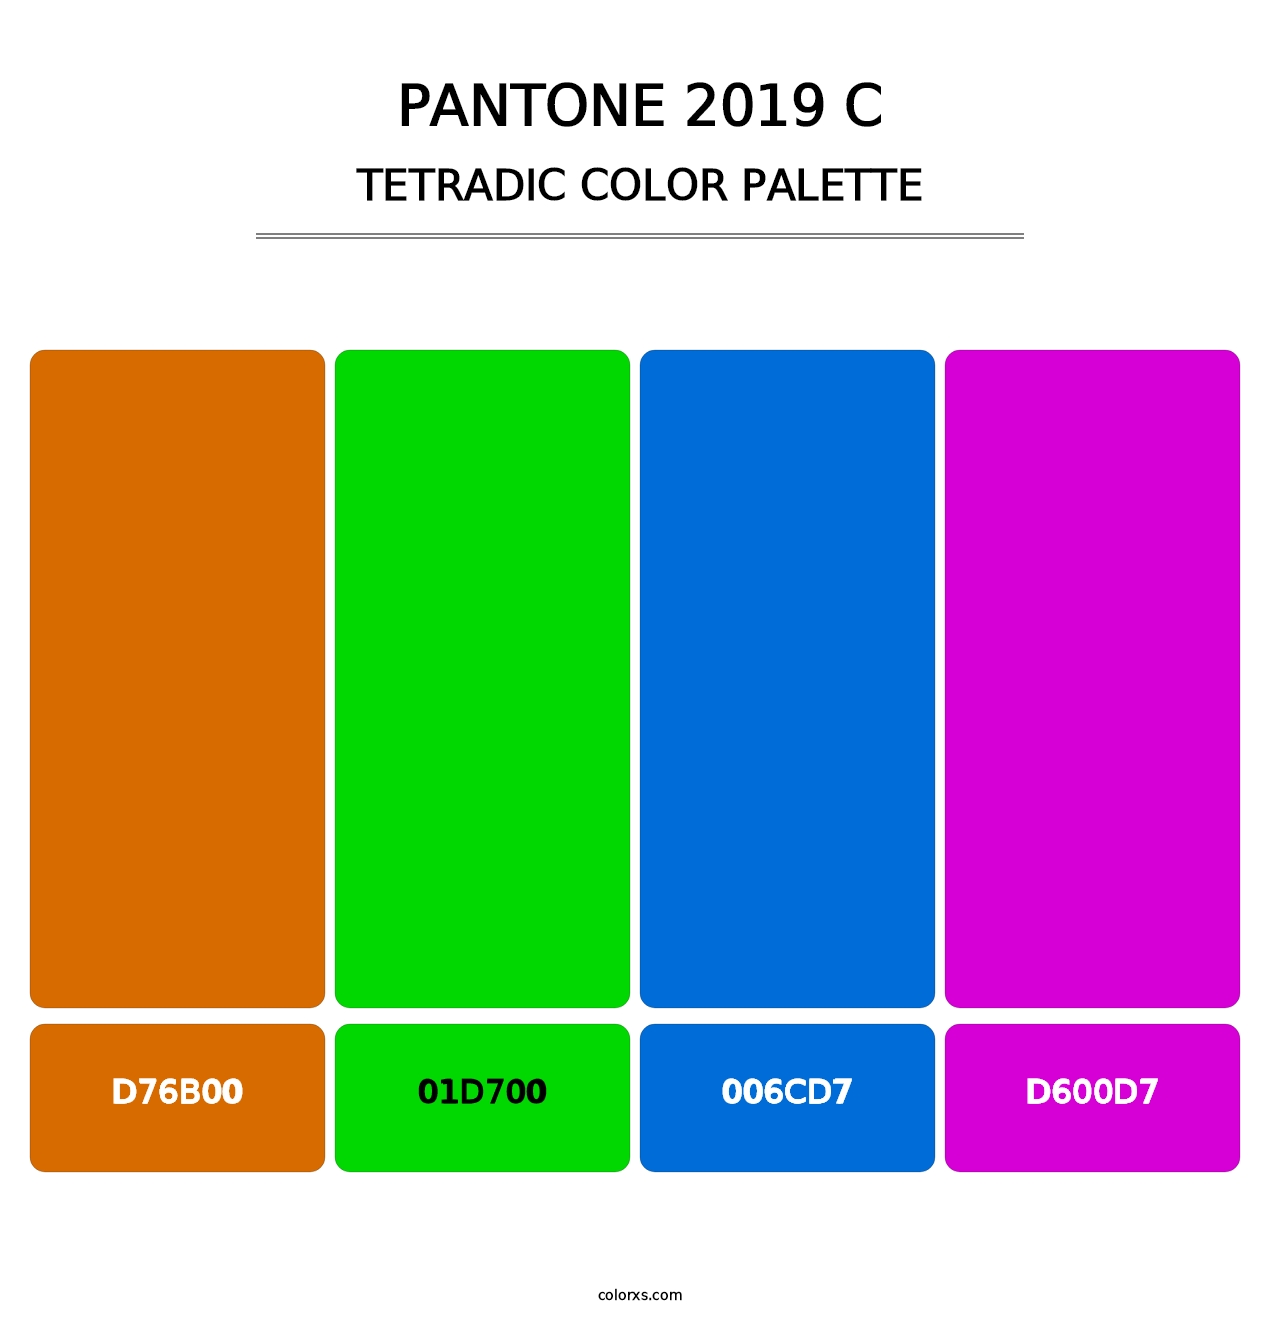 PANTONE 2019 C - Tetradic Color Palette